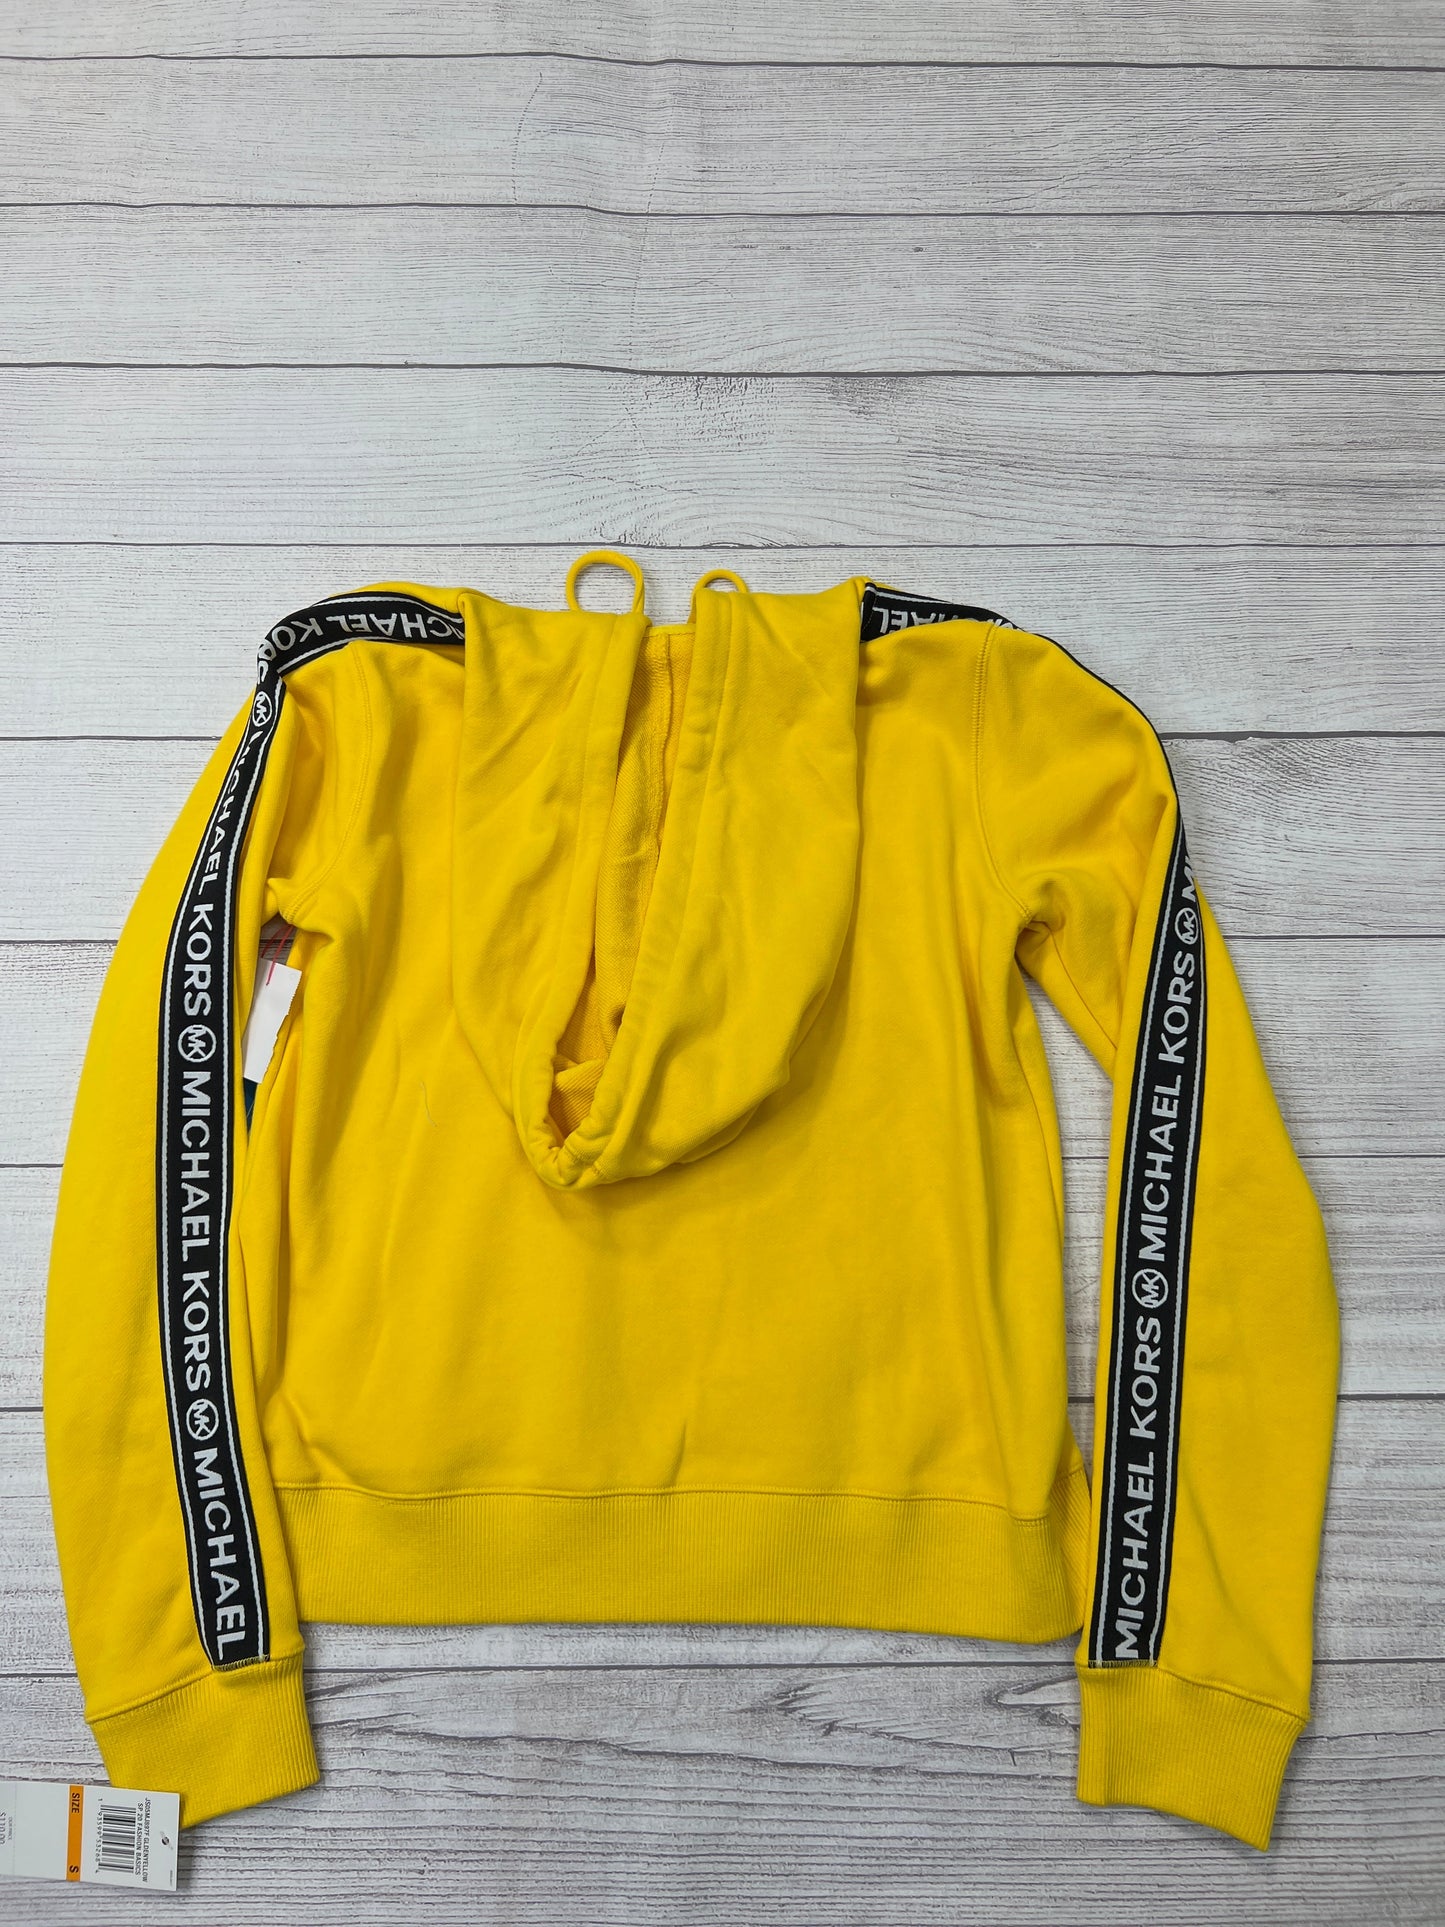 Sweatshirt Designer By Michael By Michael Kors  Size: S